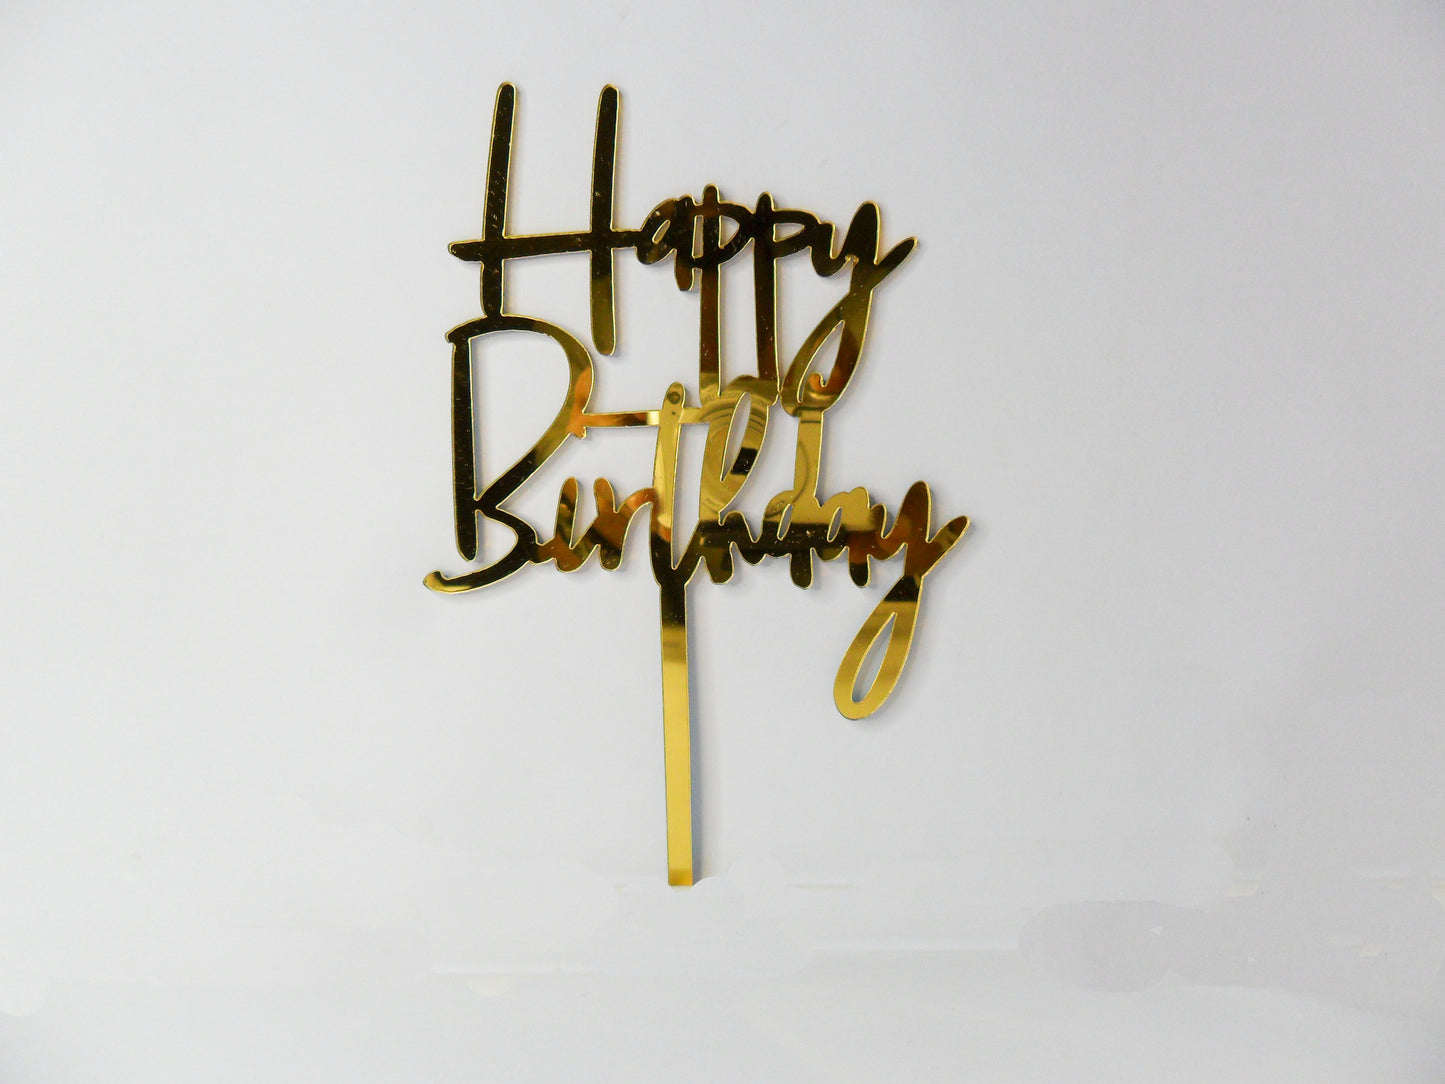 Express Golden Happy Birthday Cake Topper